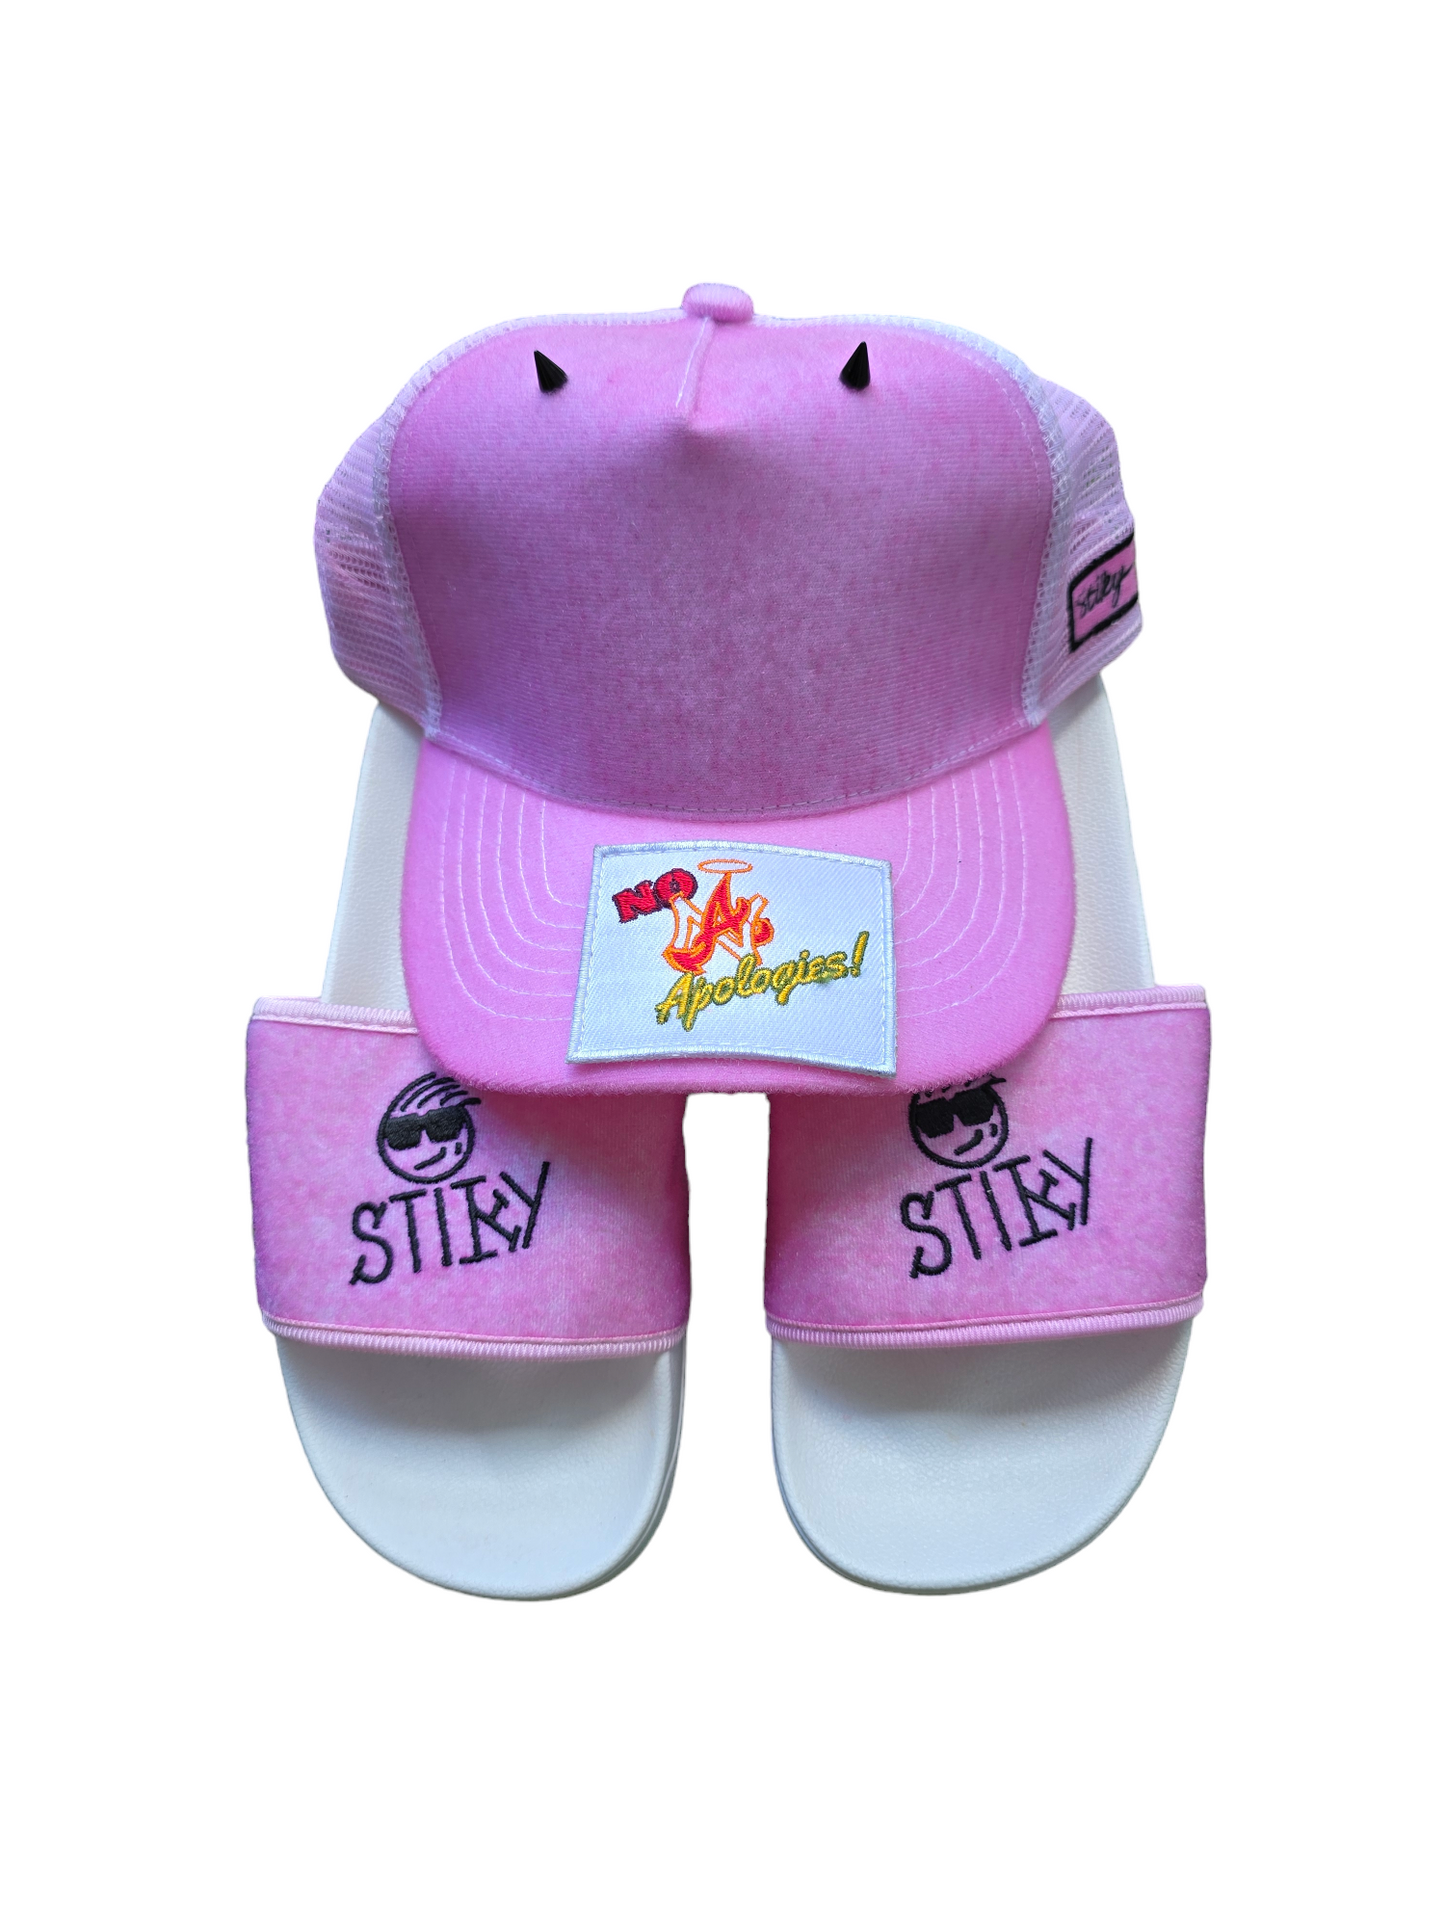 Stiky Slides - "Pinky" Limited Edition